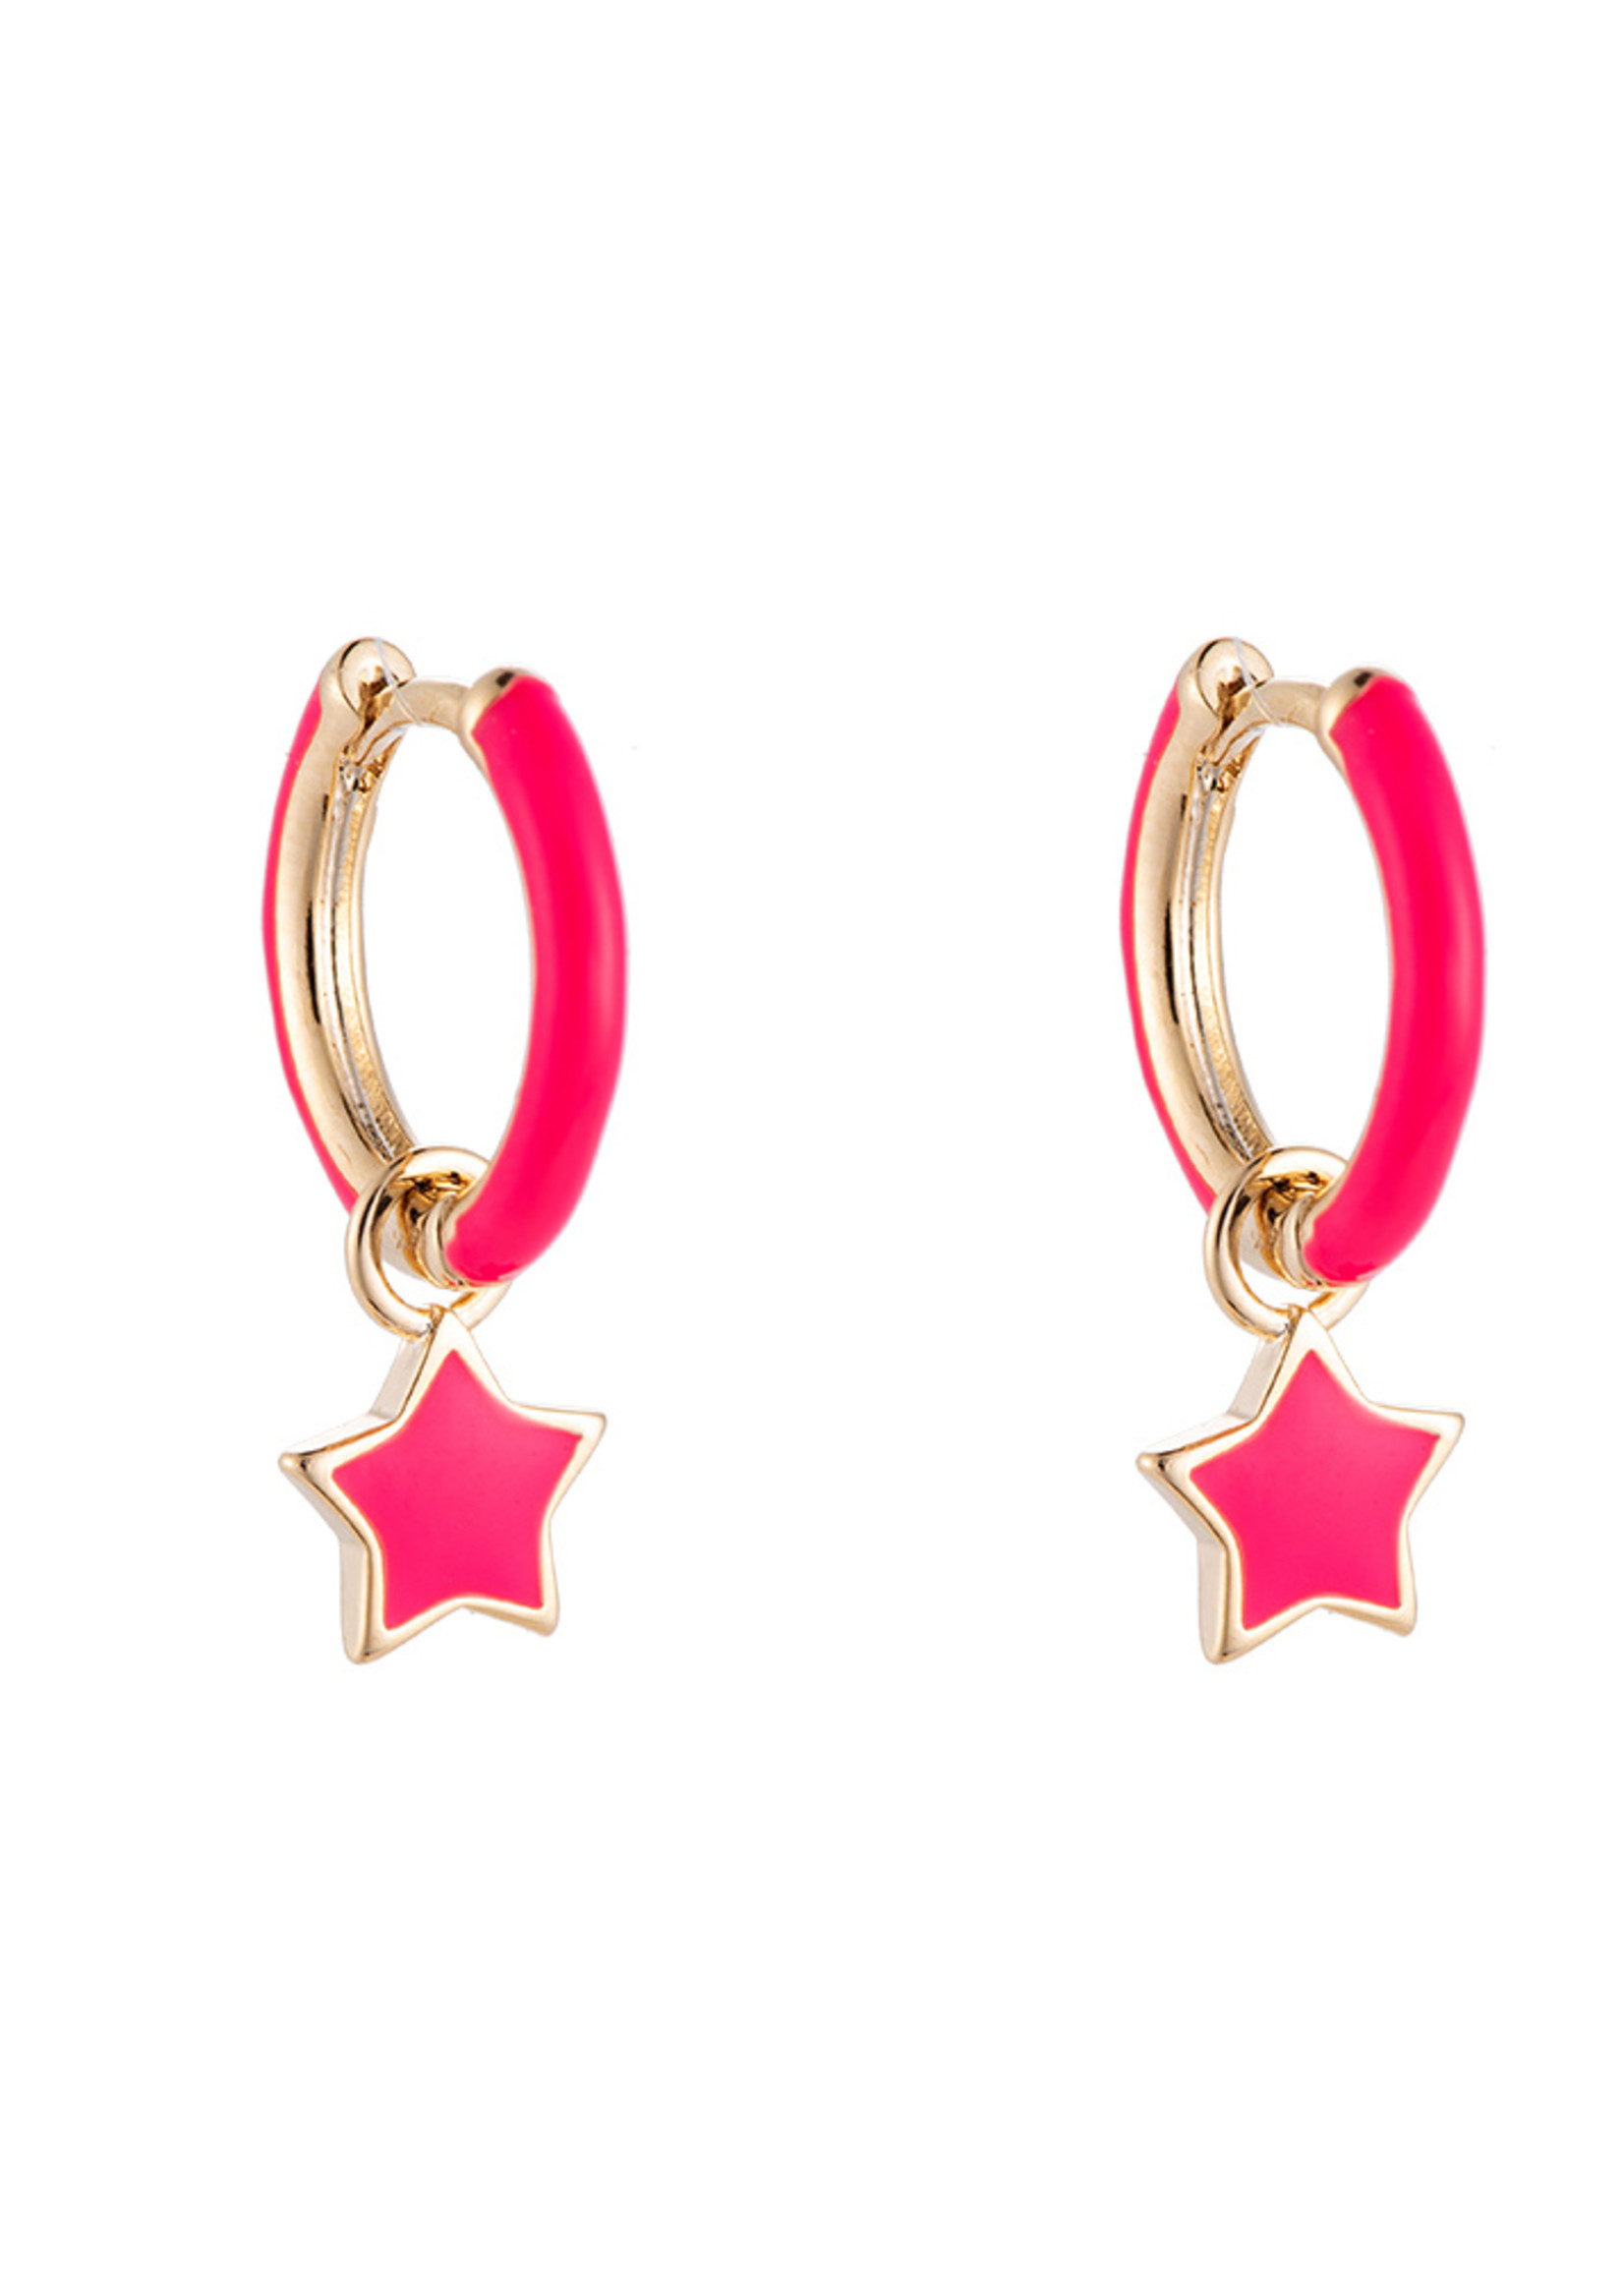 Dottilove Pink Star Earring - PER STUK